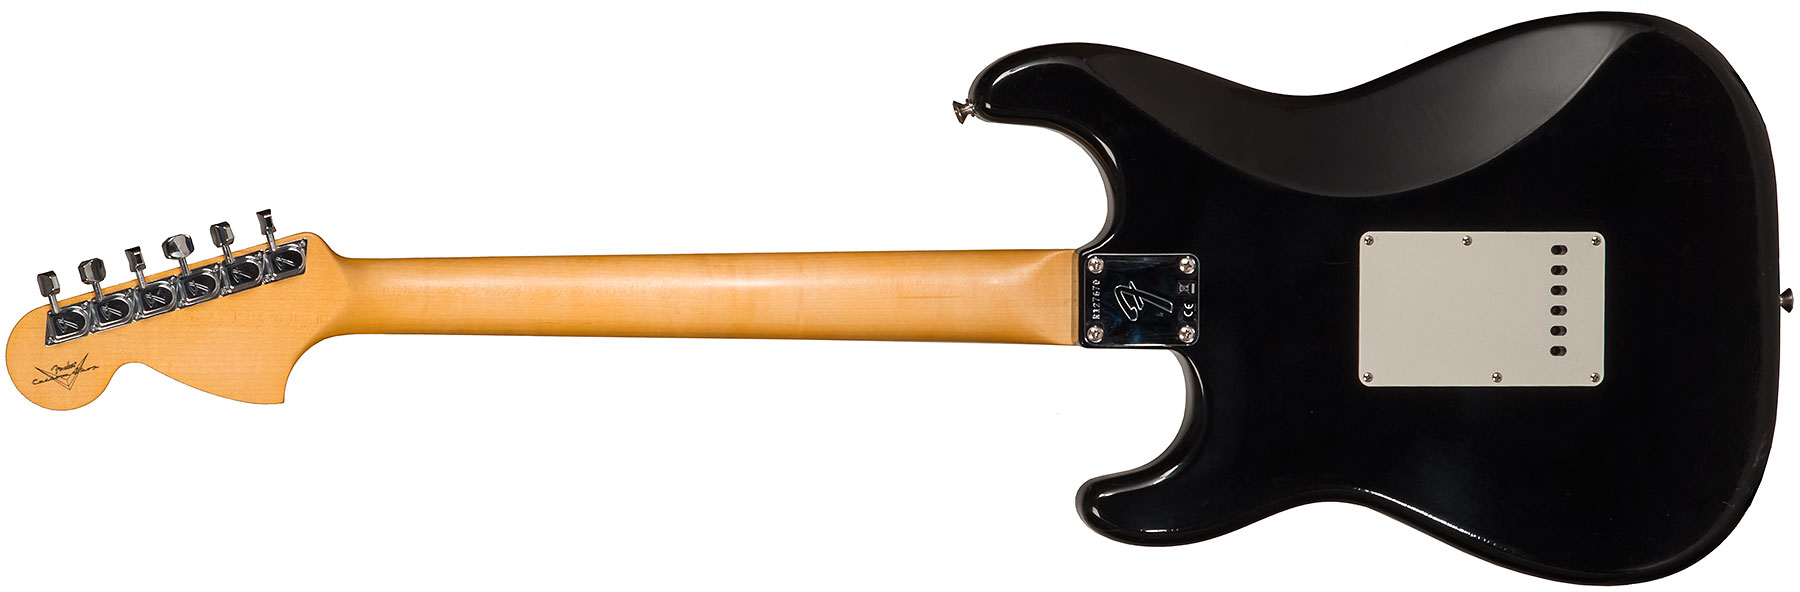 Fender Custom Shop Strat 1969 3s Trem Mn #r127670 - Closet Classic Black - Elektrische gitaar in Str-vorm - Variation 1